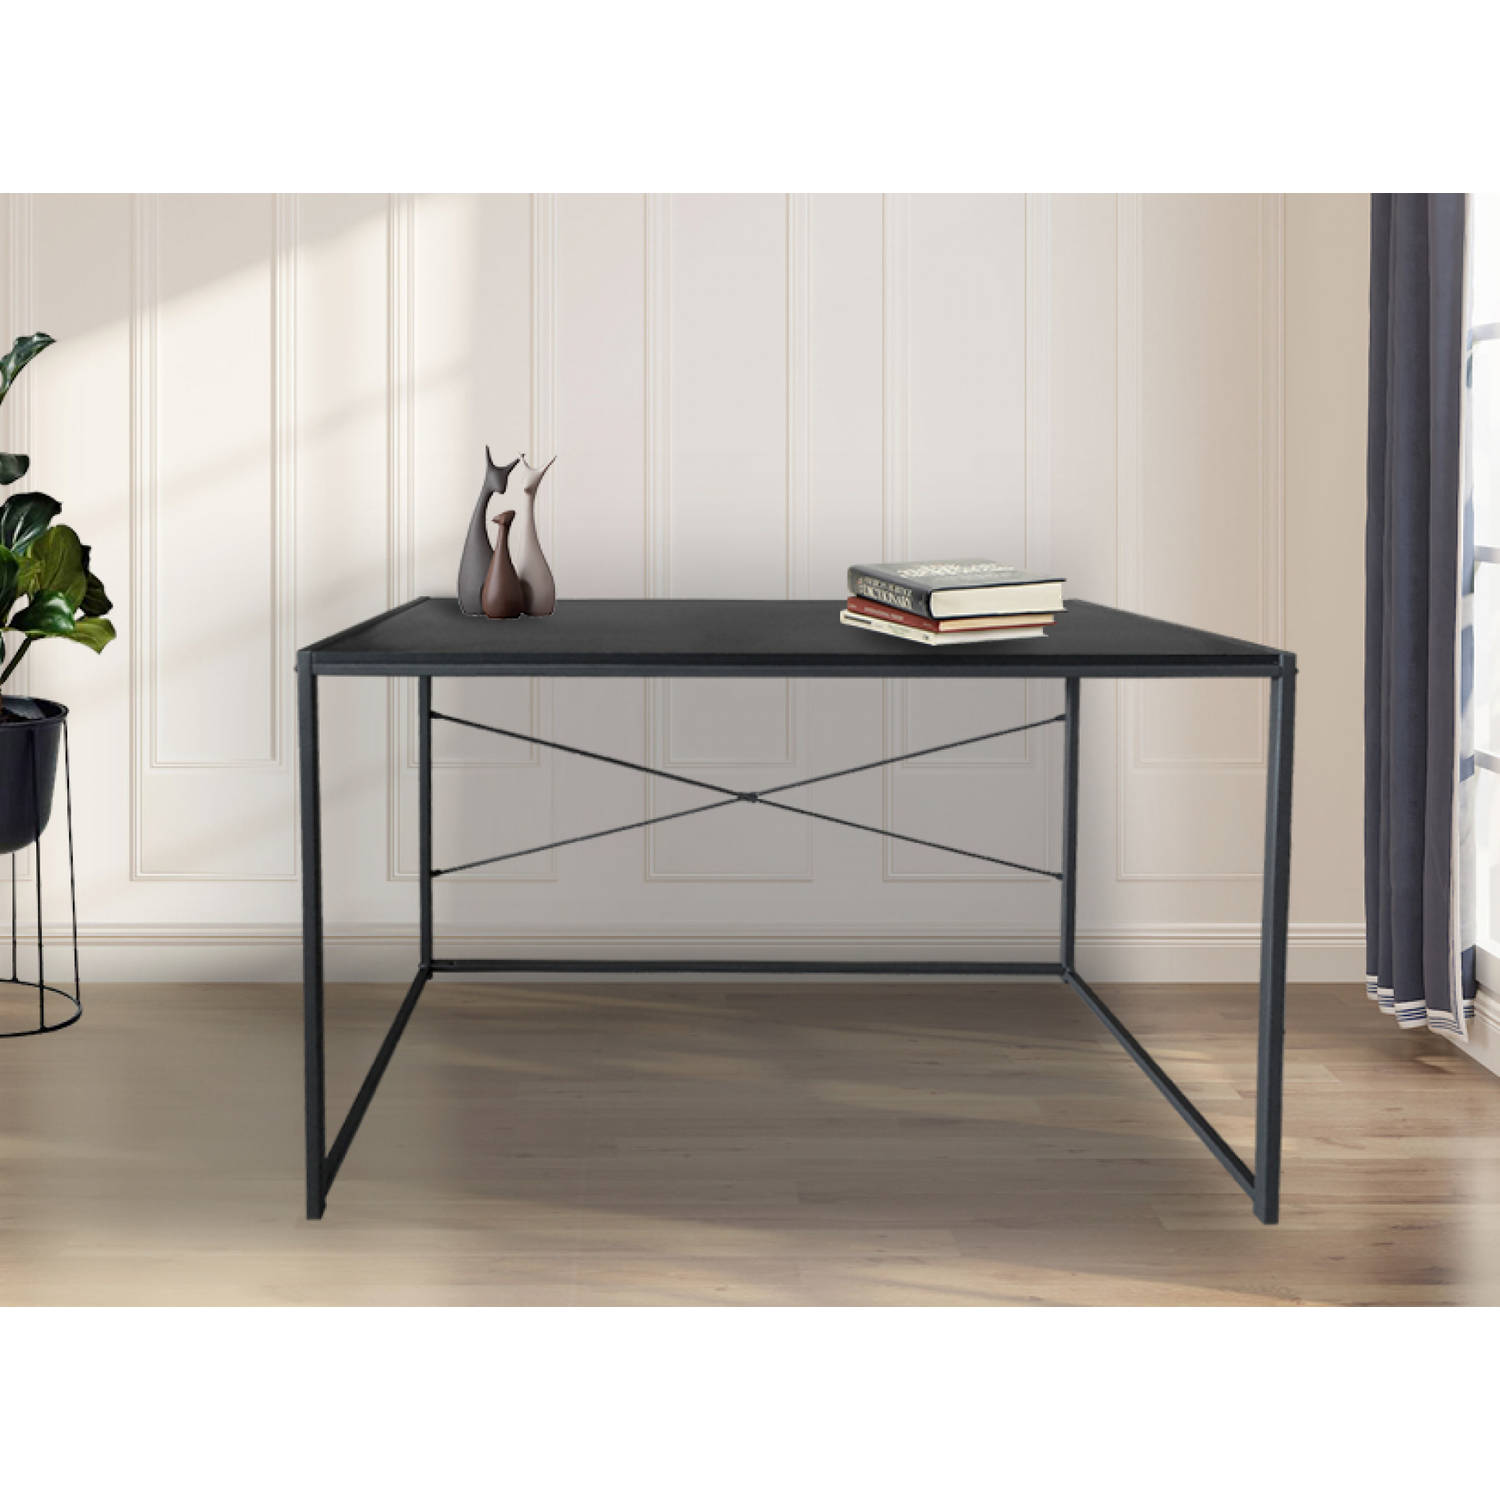 Onverenigbaar alledaags kalkoen Bureau Stoer - laptoptafel - computertafel - sidetable - industrieel design  - 100 cm breed - zwart | Blokker